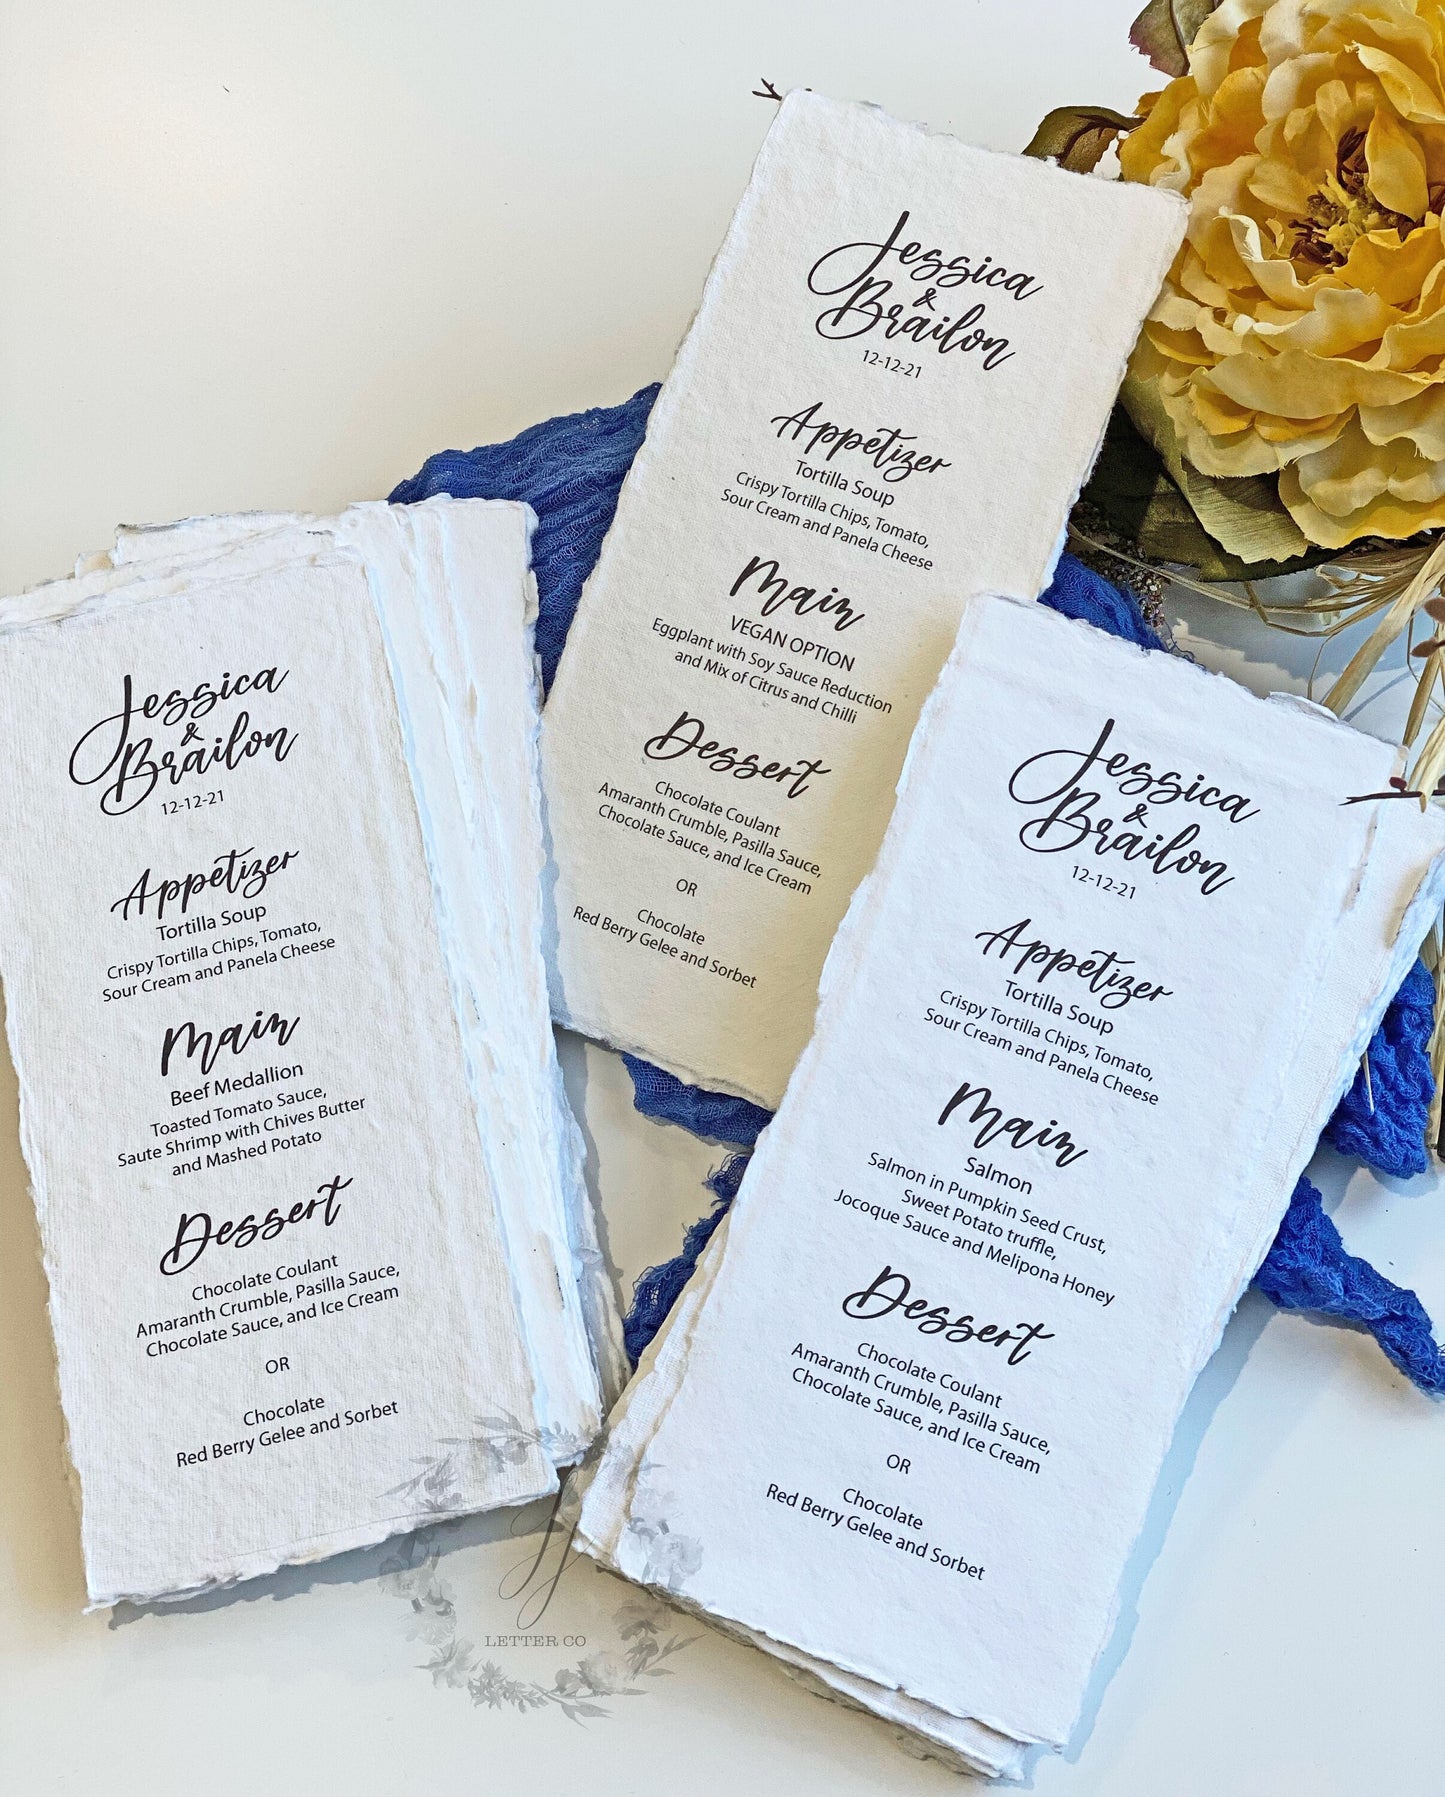 Deckled Edge Cotton Paper Wedding Menu Card | Cotton Rag Paper Gold Edge Accents